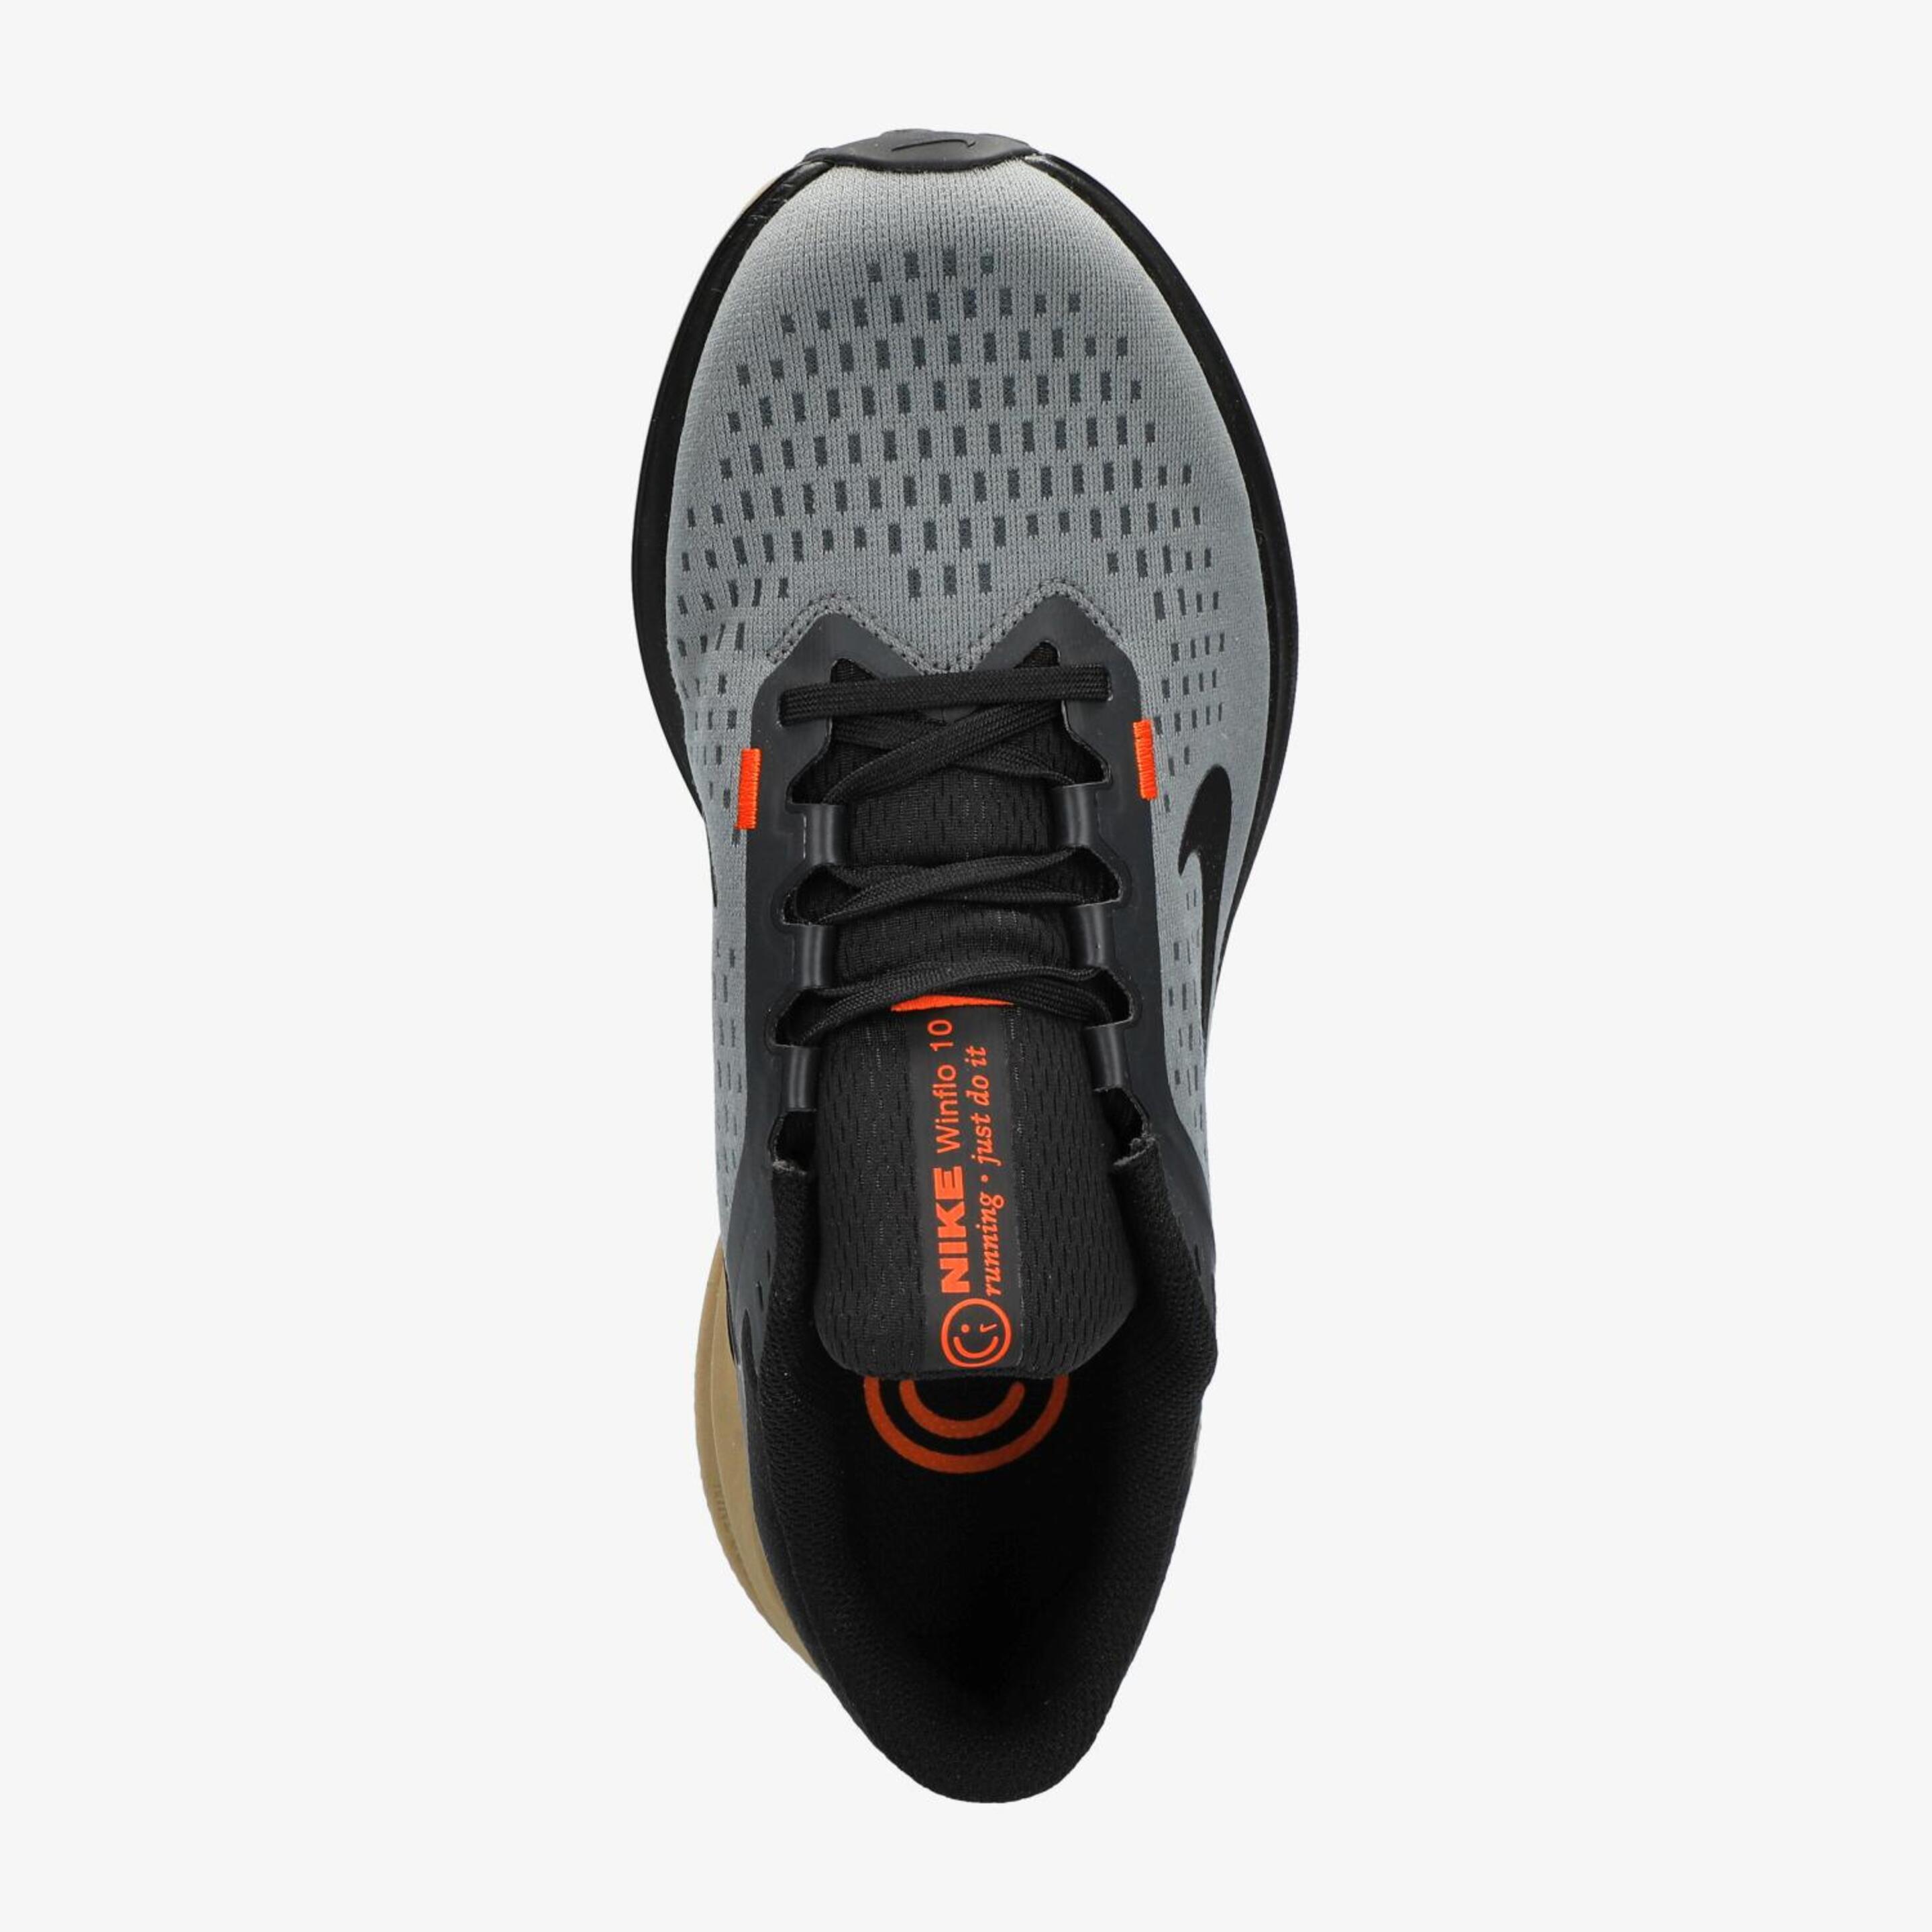 Nike Air Winflo 10 - Gris - Zapatillas Running Hombre